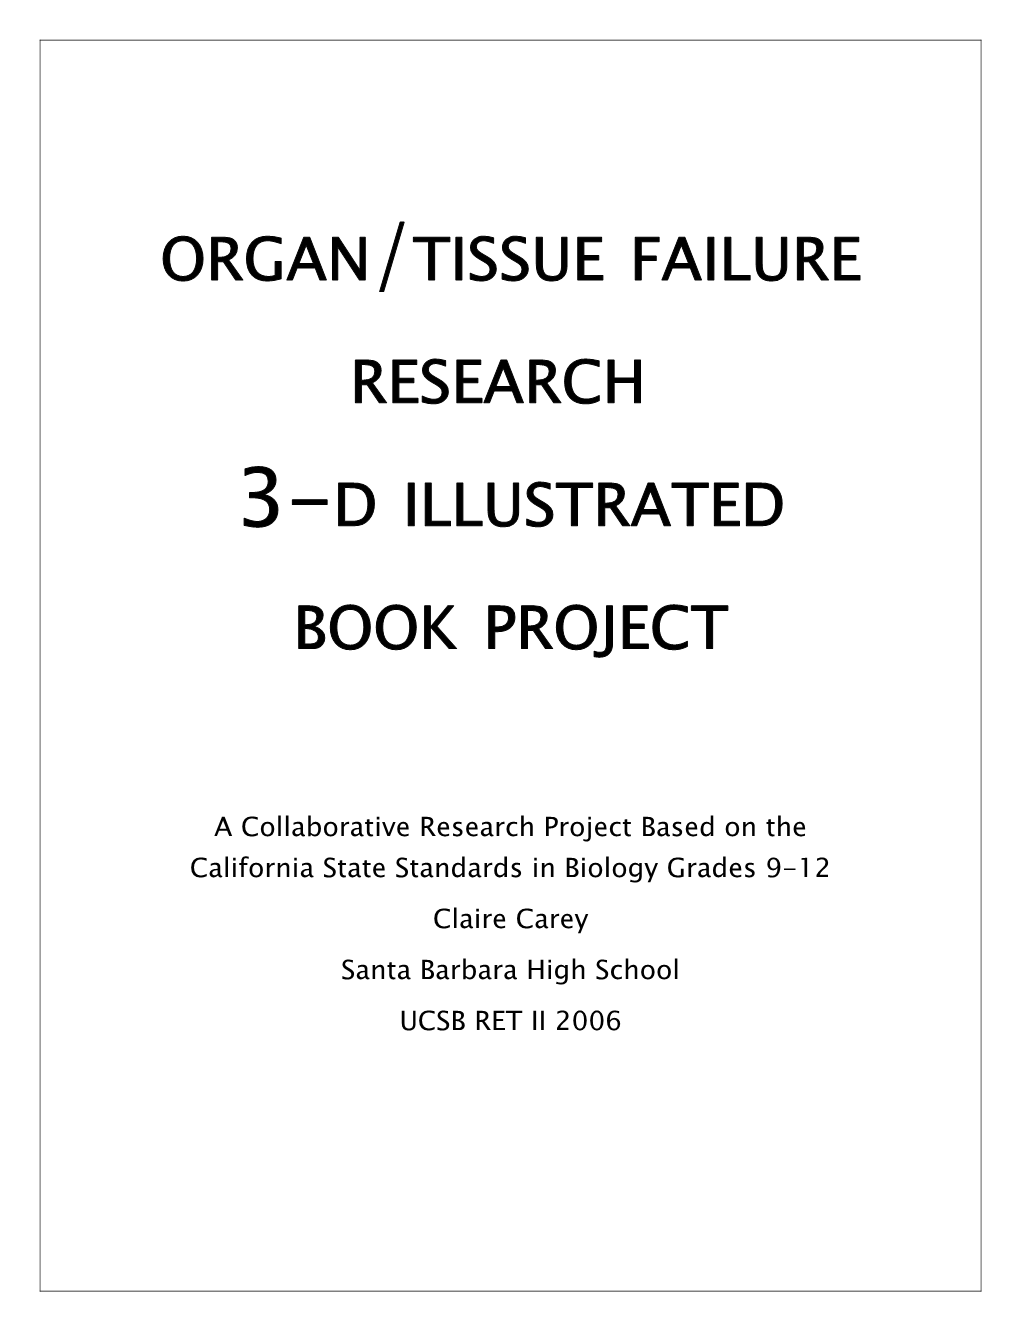 Organ/Tissue Failure Research Project